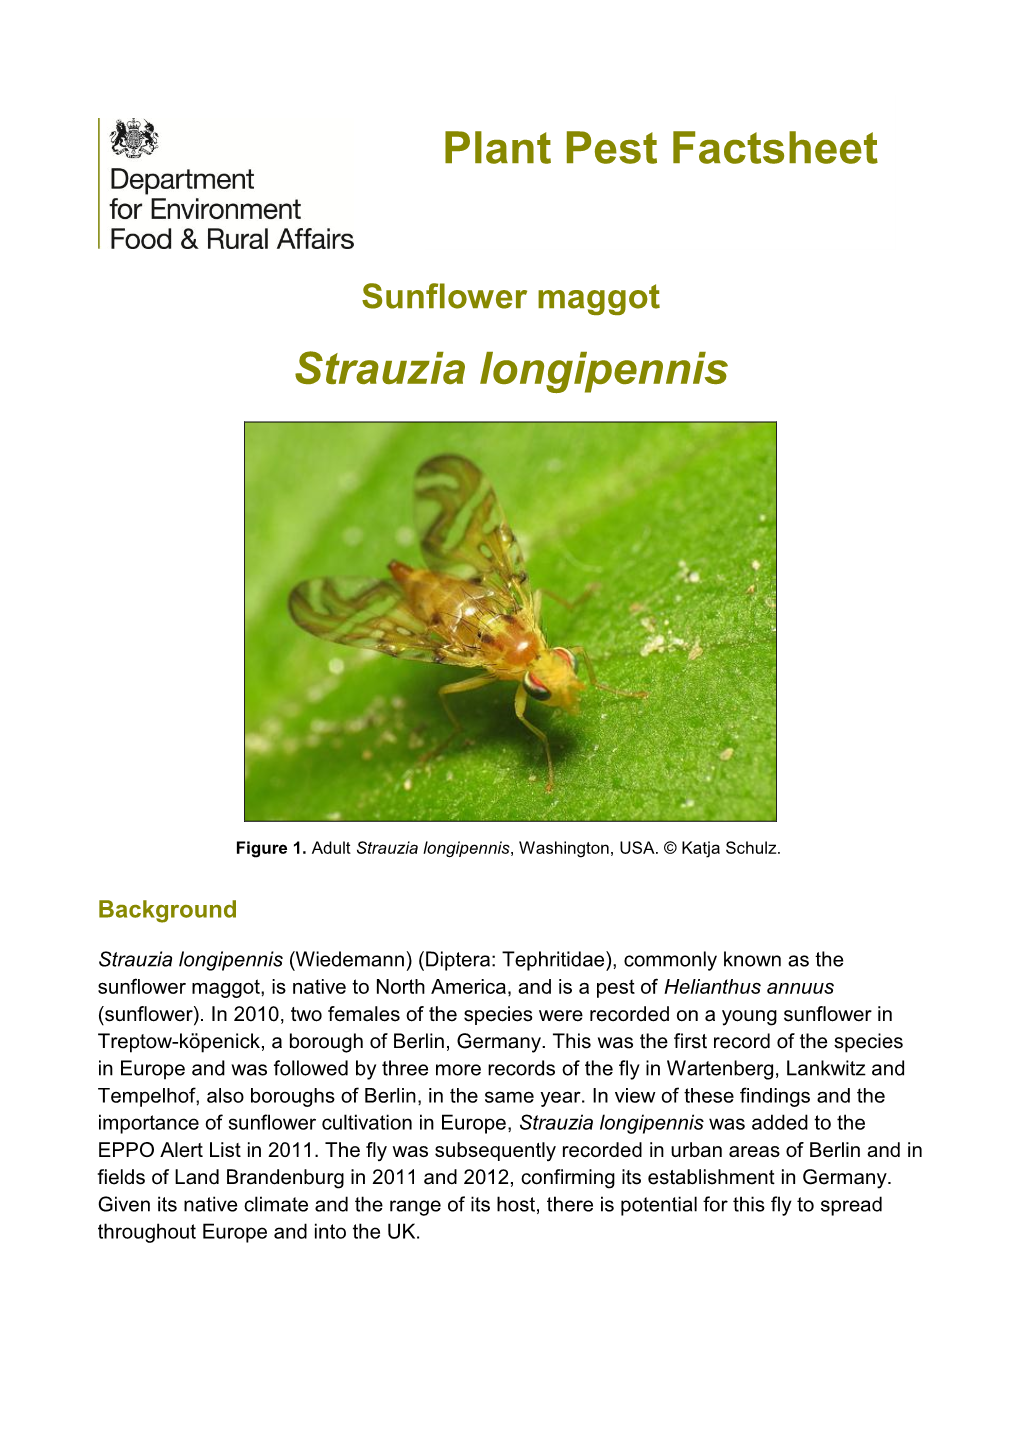 Sunflower Maggot: Strauzia Longipennis